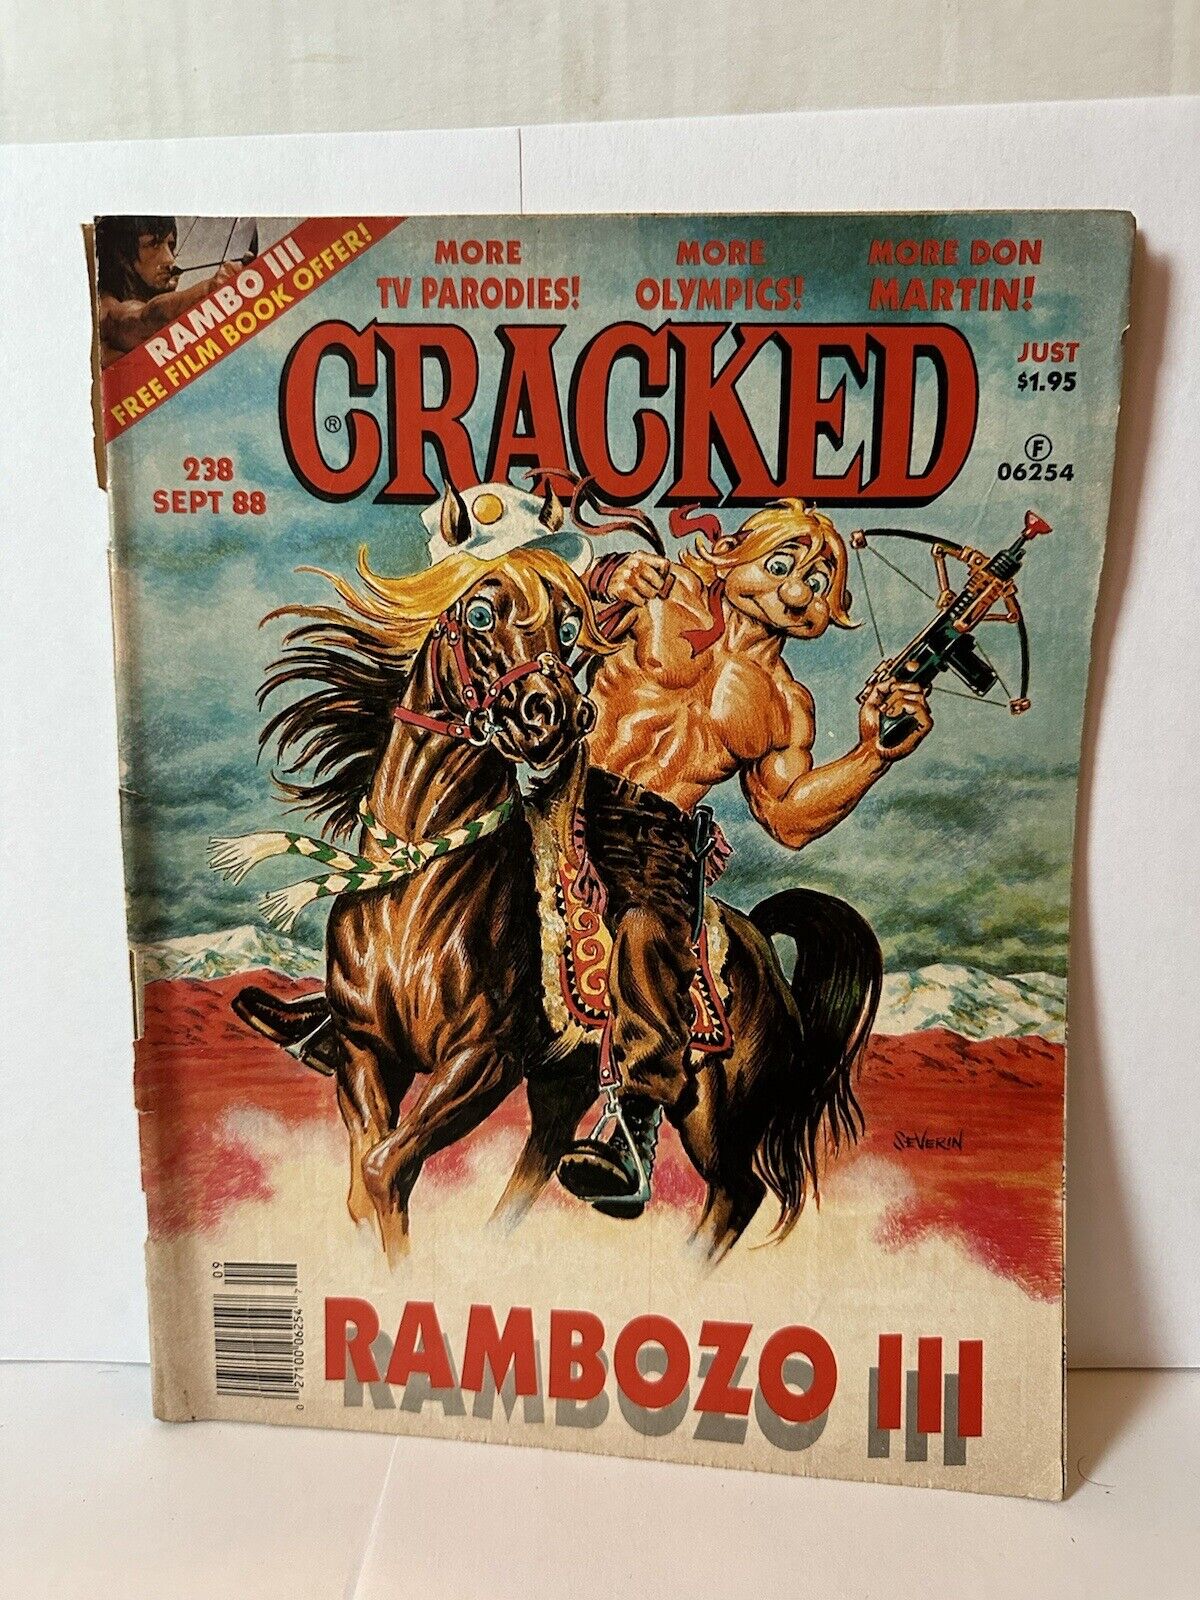 CRACKED MAGAZINE #238 SEPT 1988 RAMBO III FIRST BLOOD FILM PARODIES GI JOKE